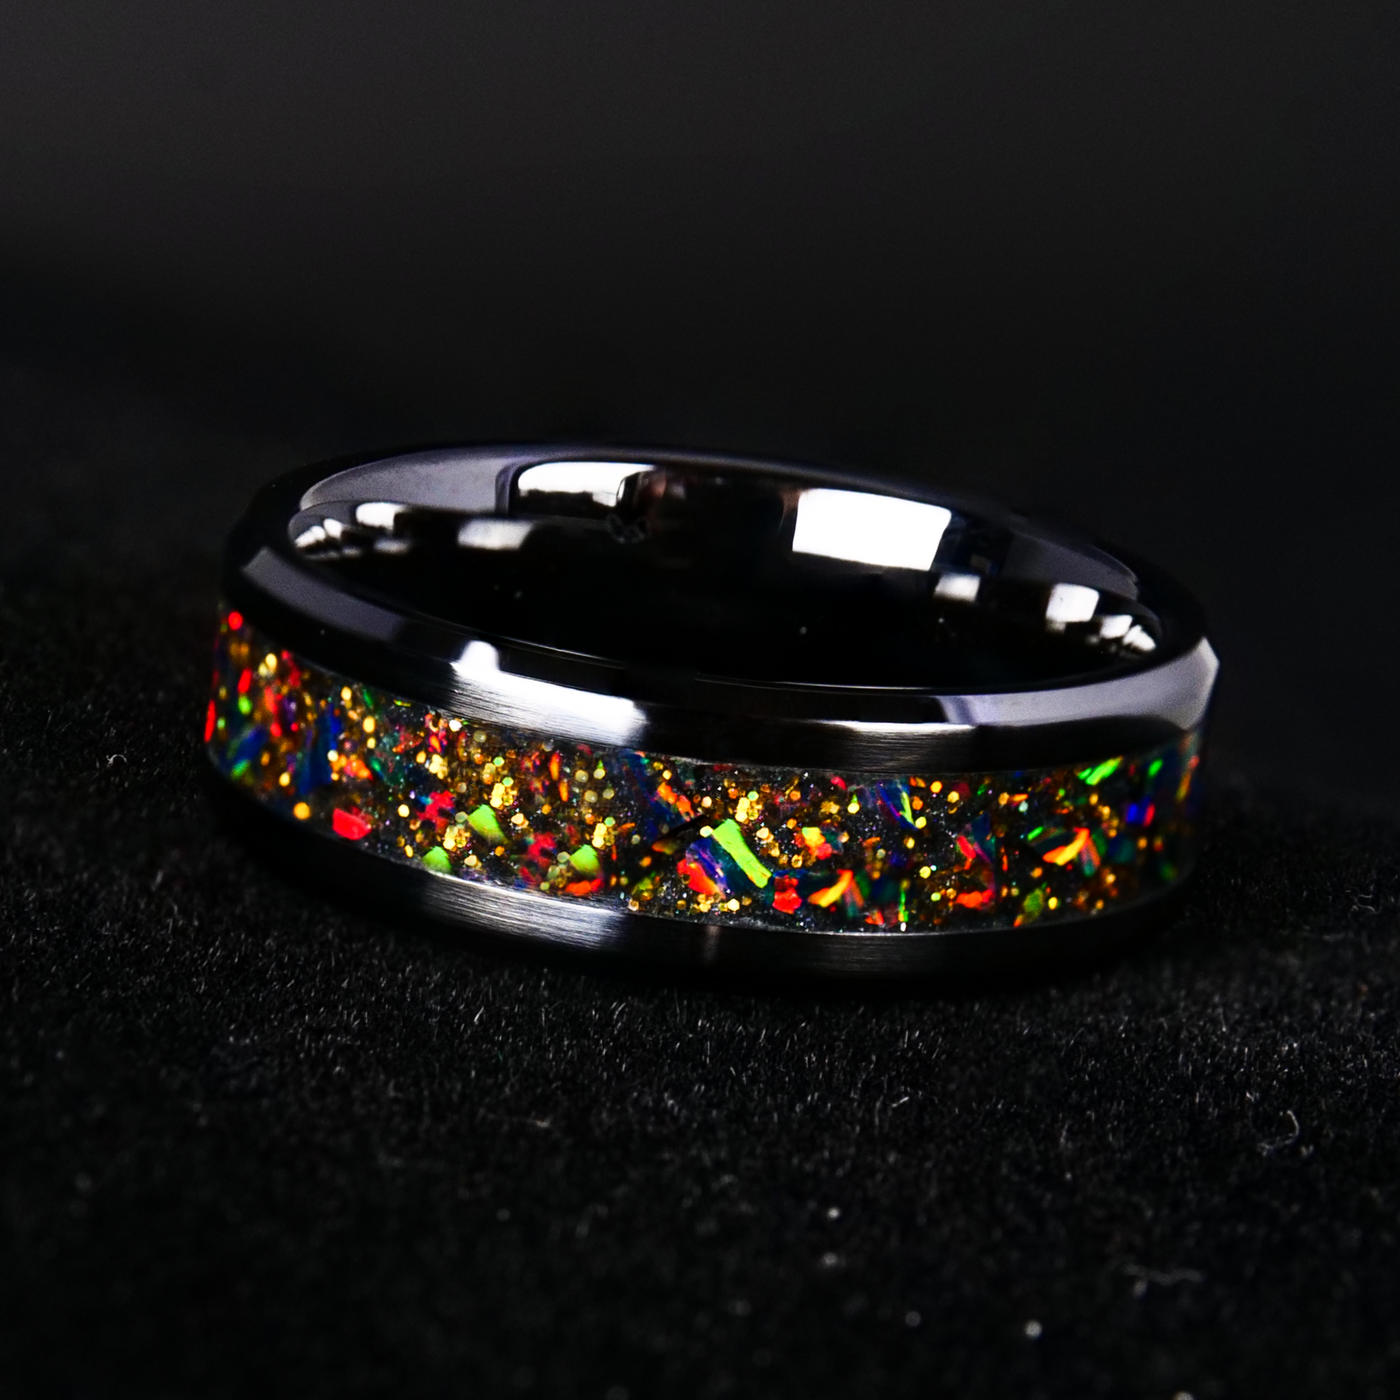 Radiant Black Fire Opal Glowstone Ring on Black Ceramic